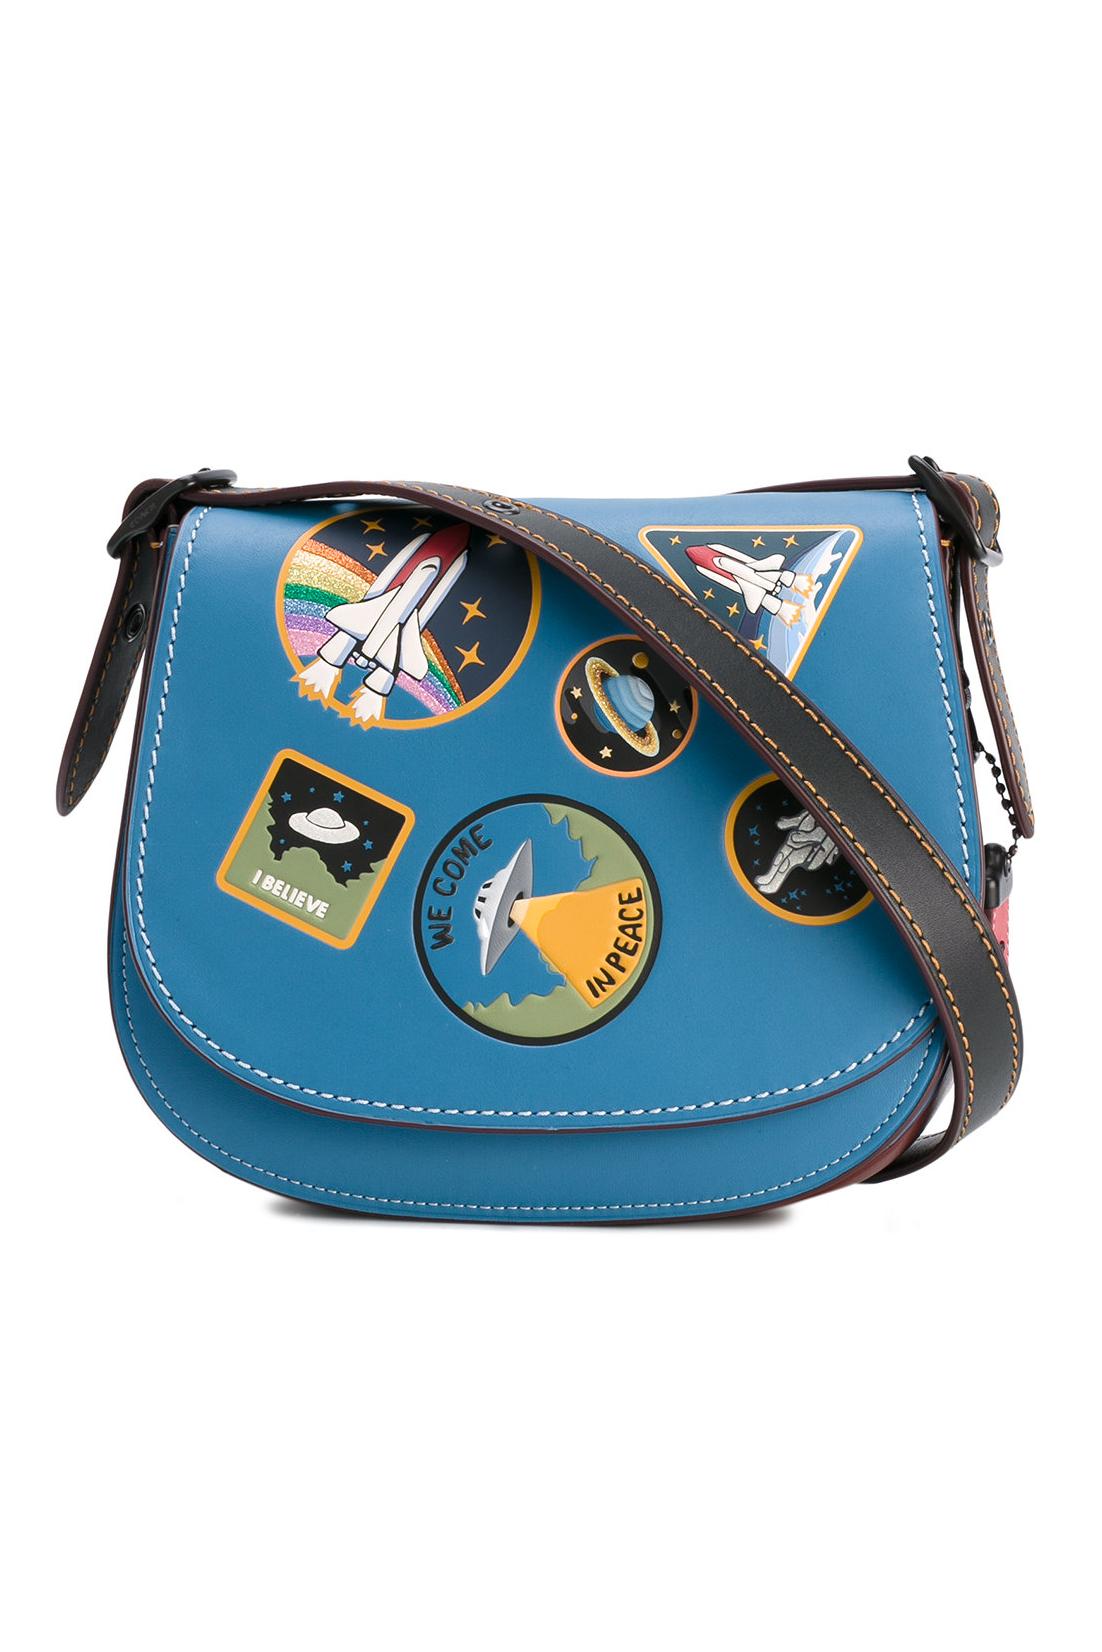 Space patch saddle bag COACH, Farfetch, €675